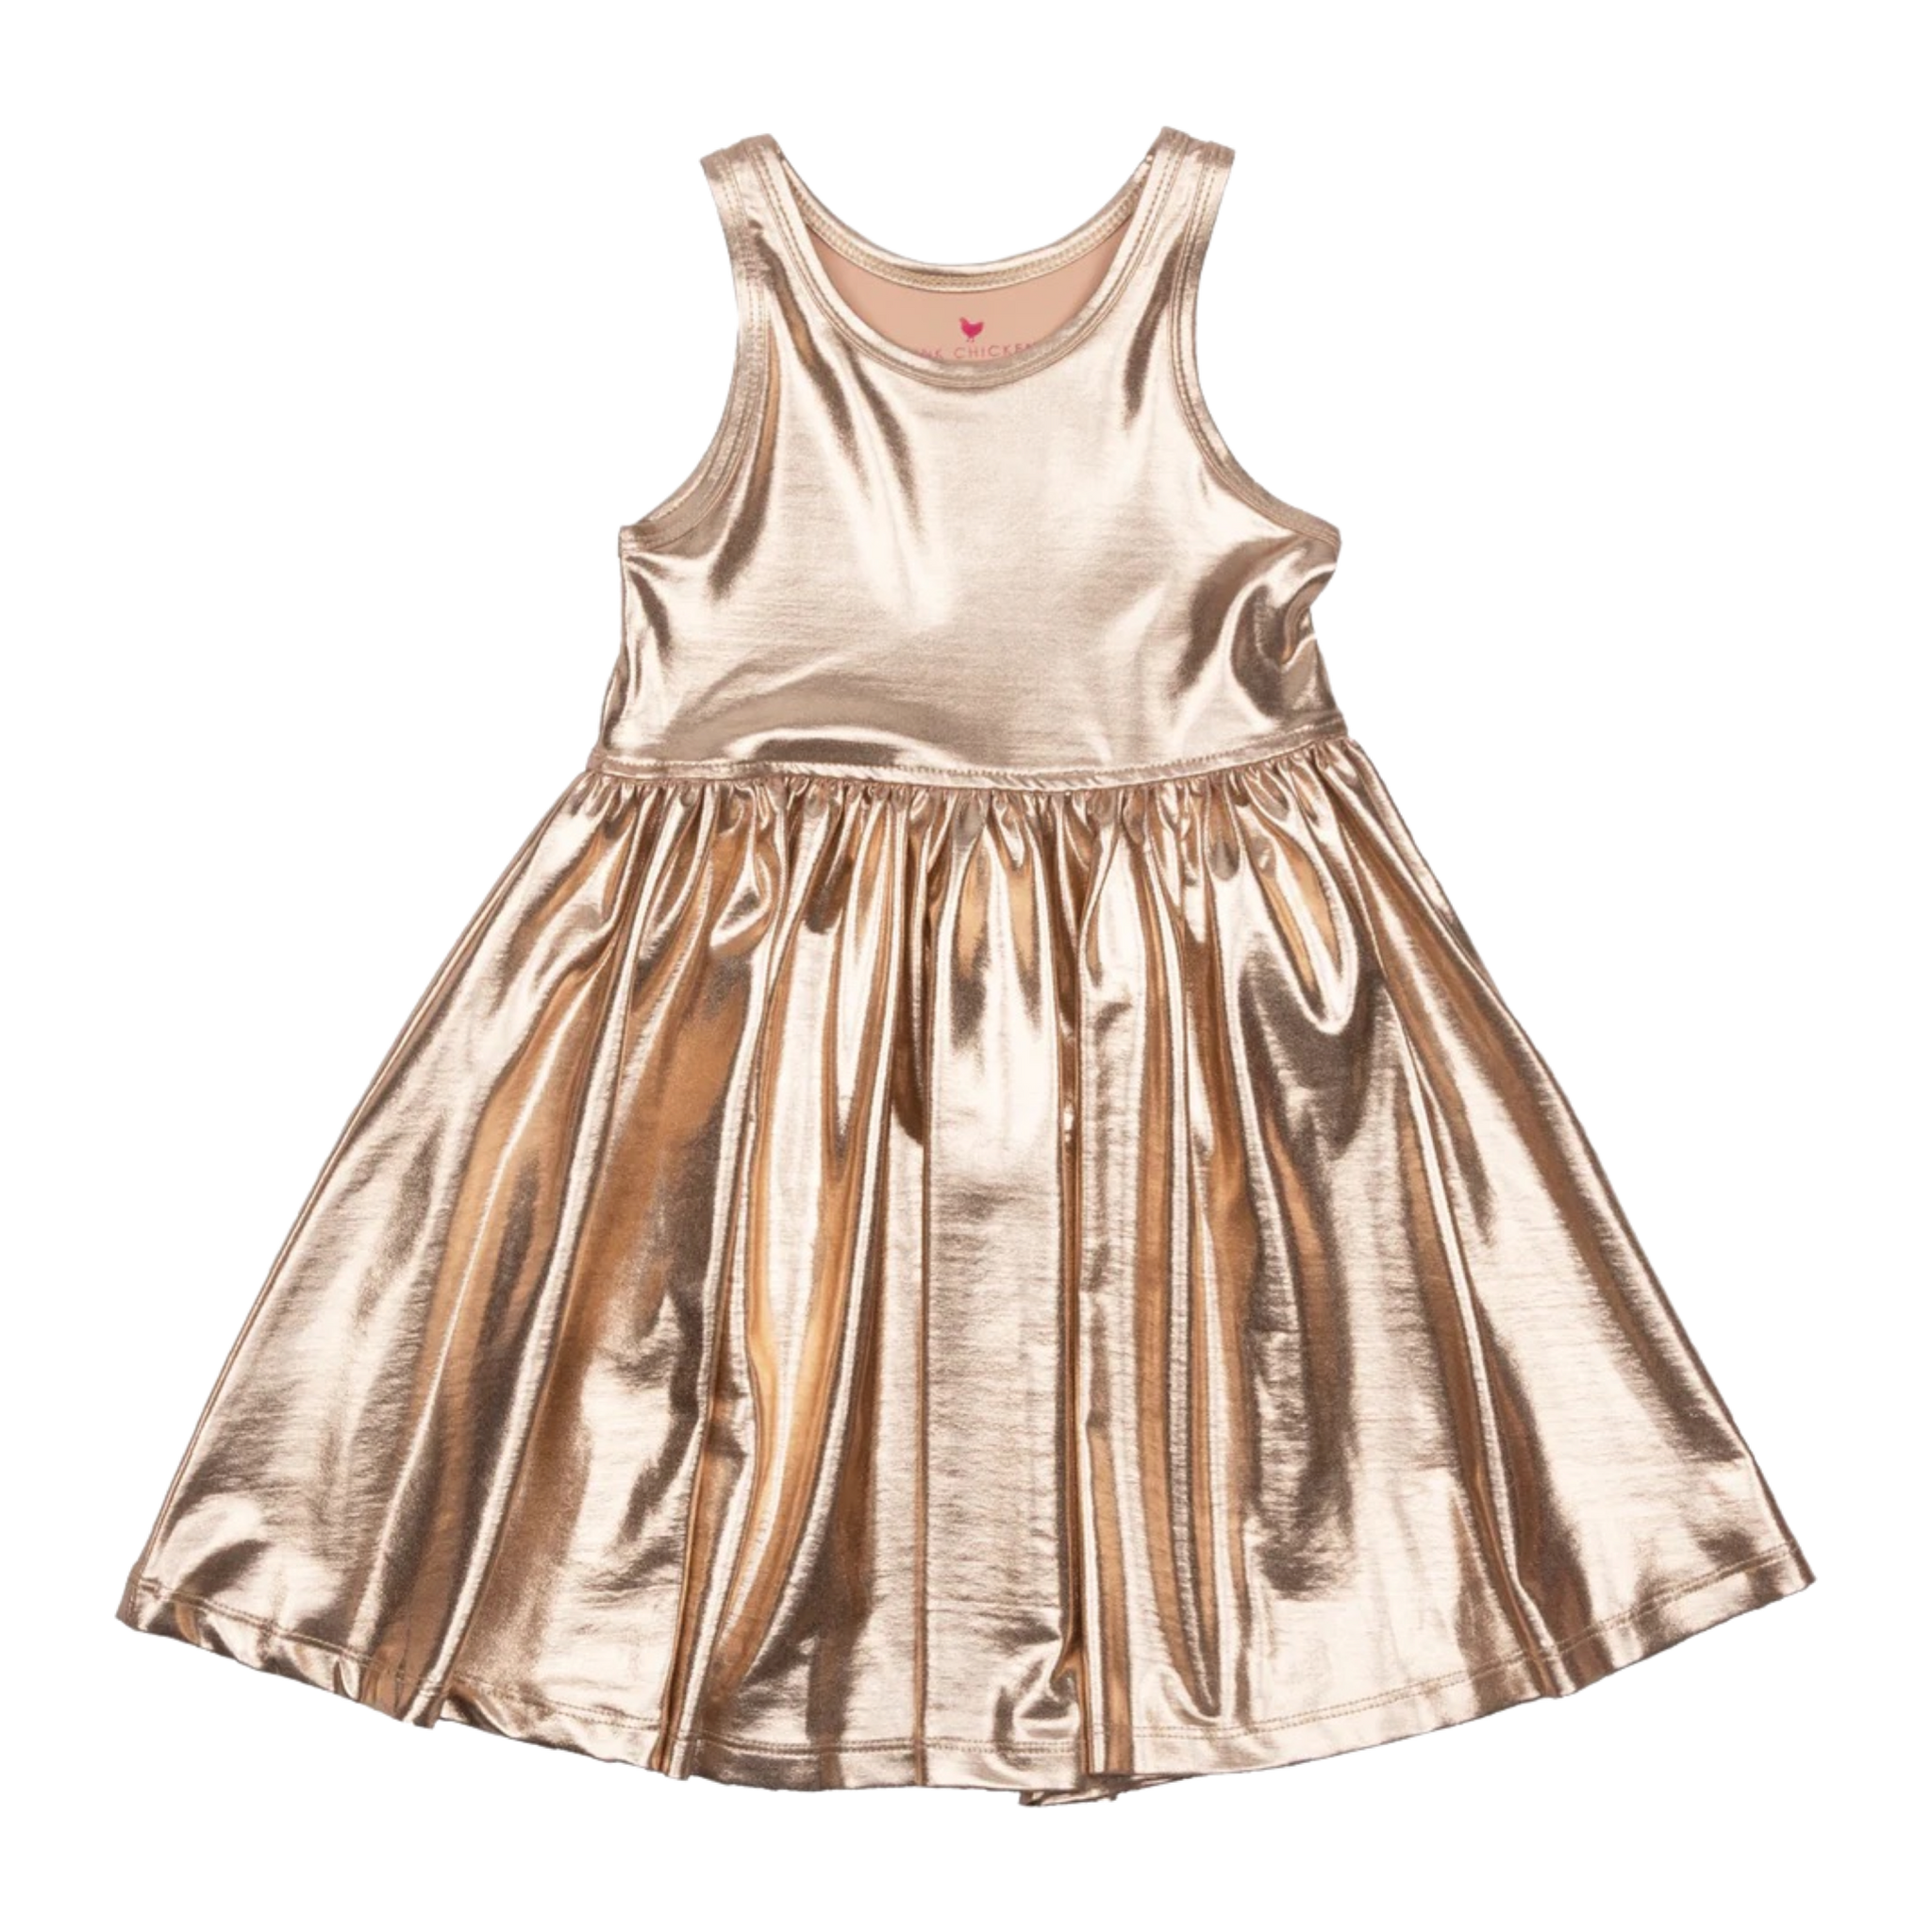 PCK Dress - Liza Gold